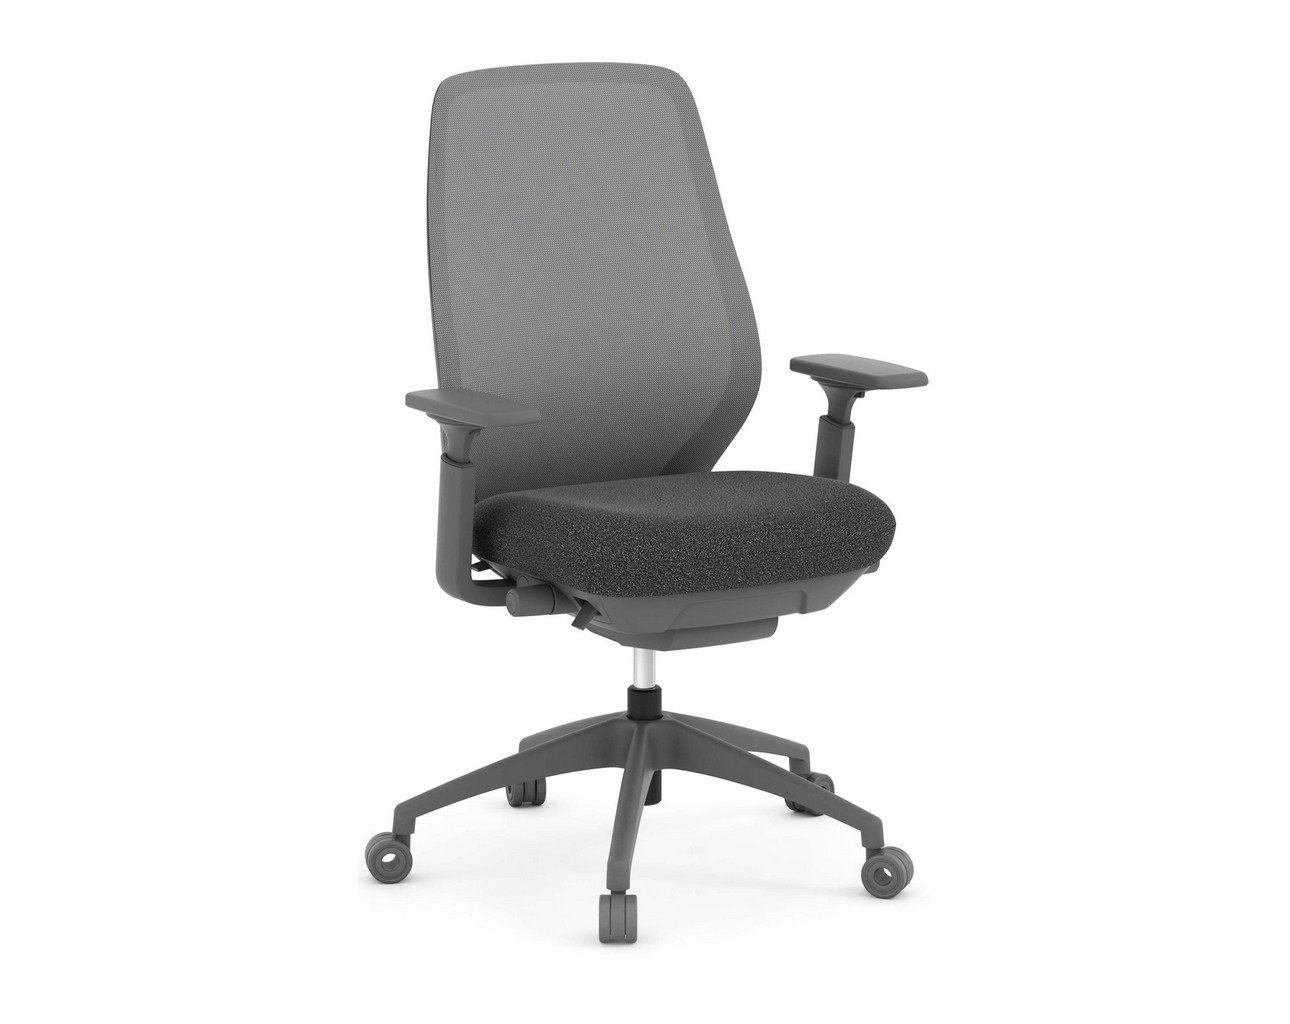 AX Deluxe Executive Chair